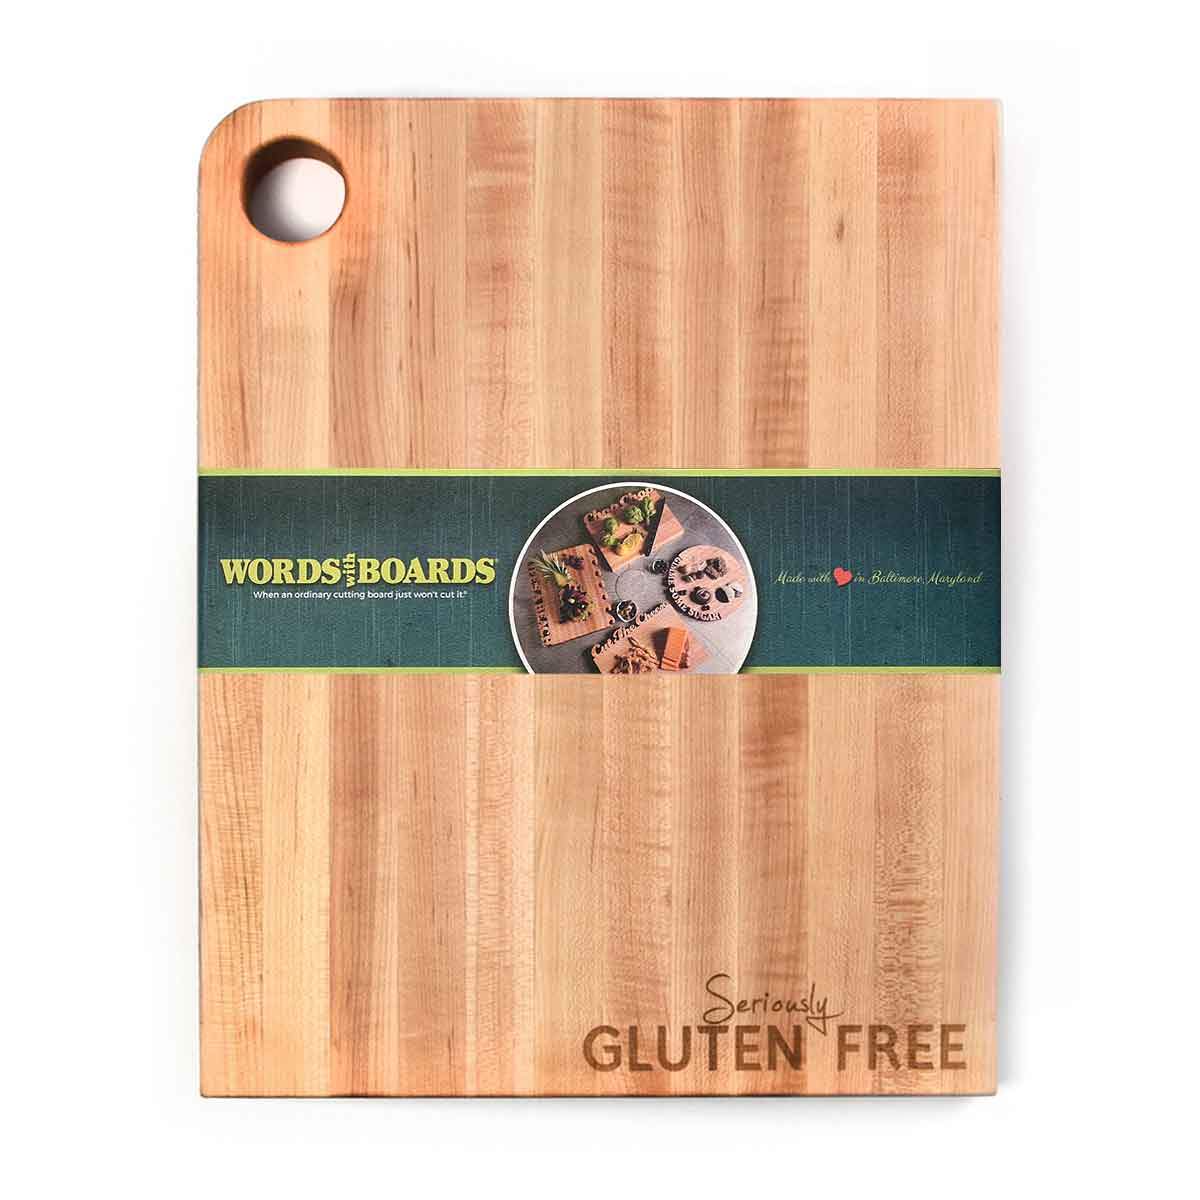 Gluten free products - cutting board